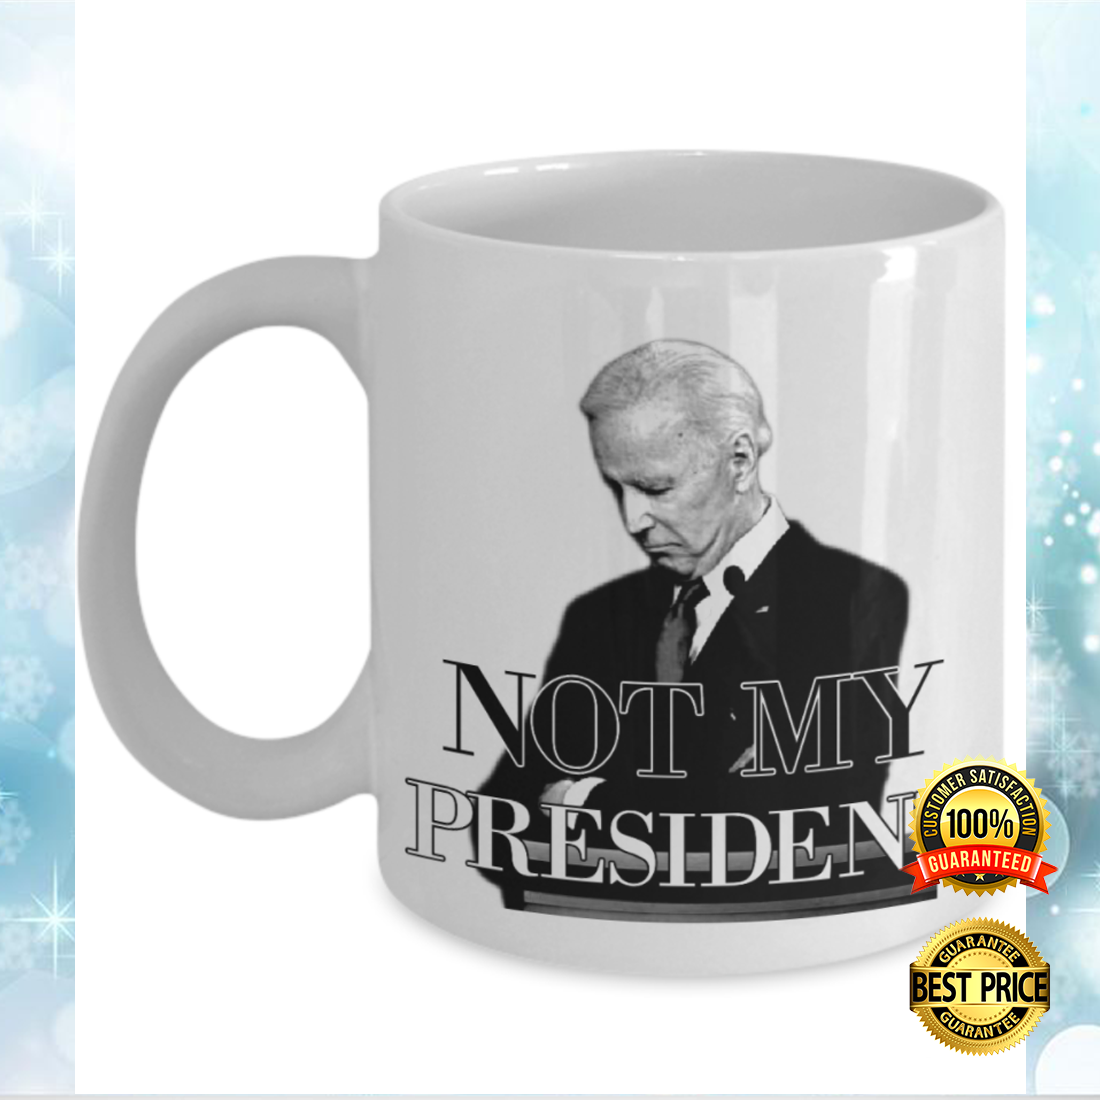 Biden not my president mug 2